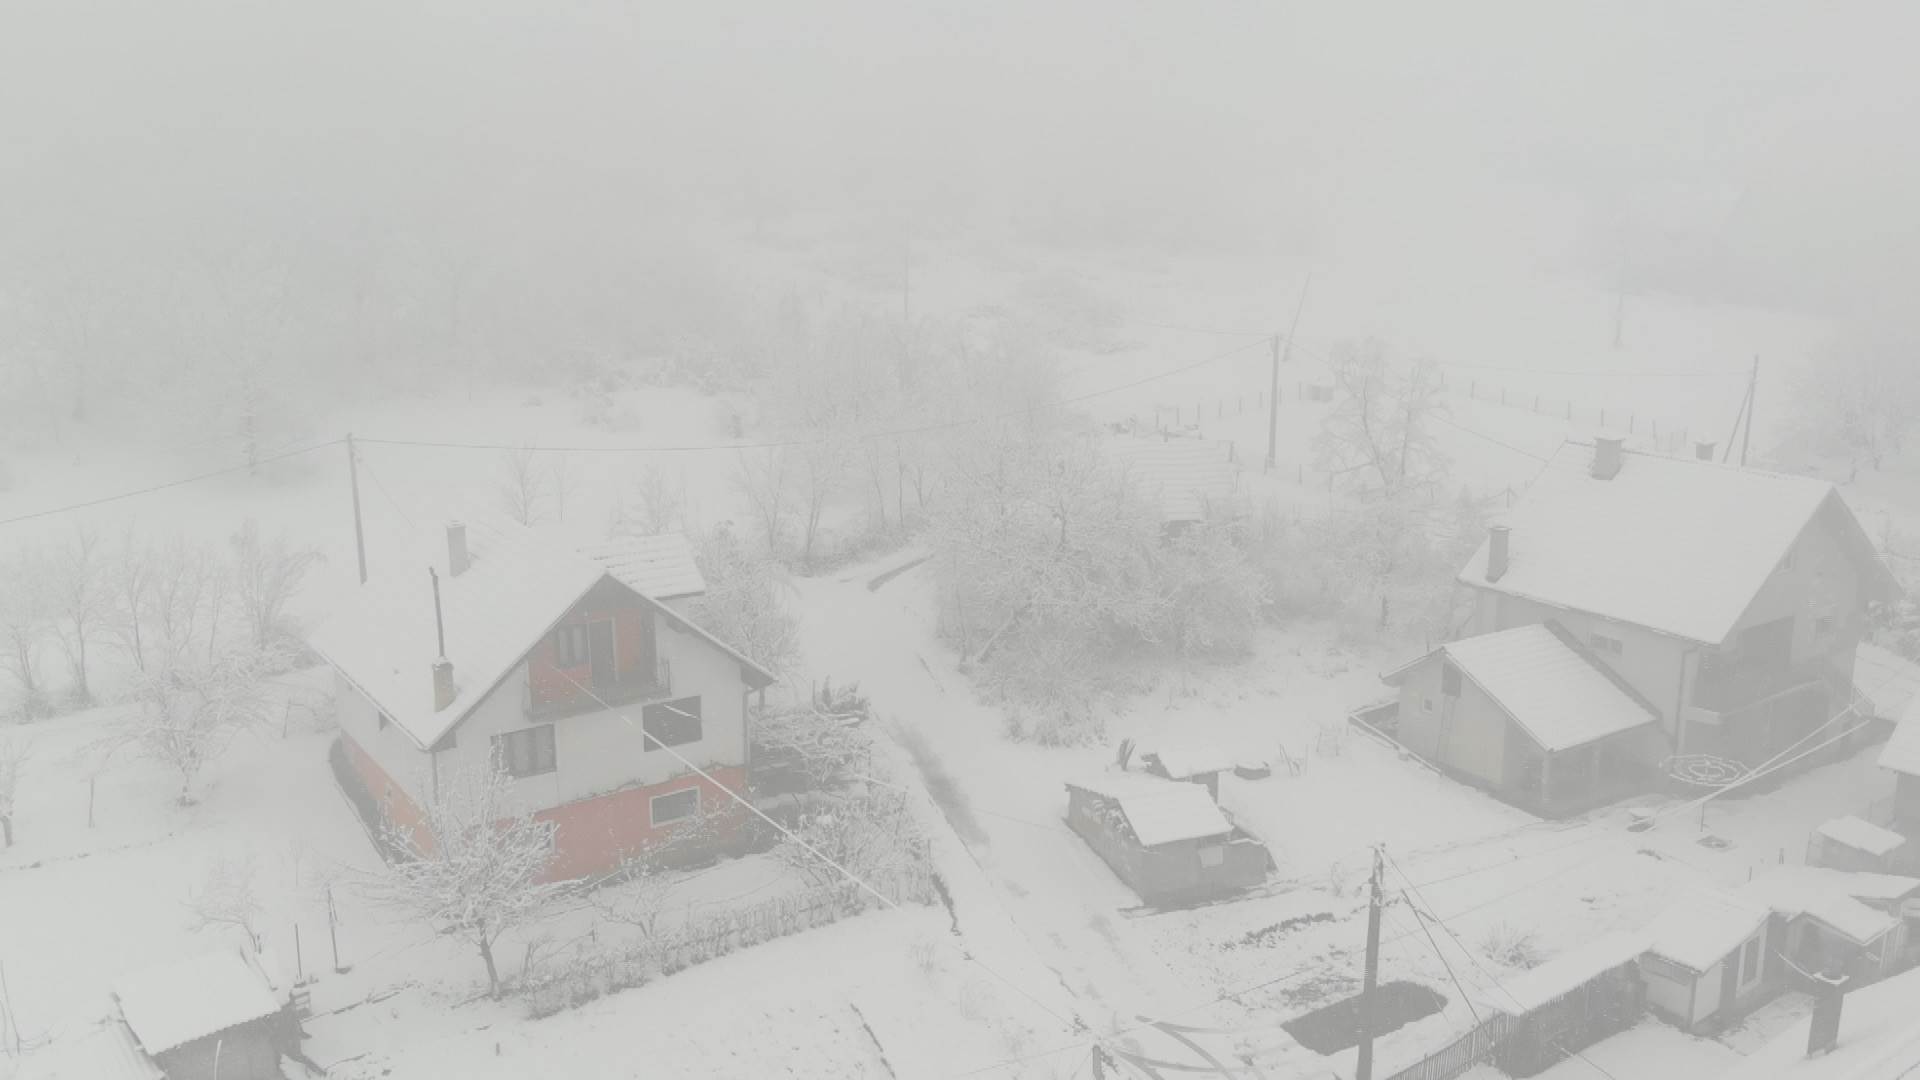  sneg zlatibor zlatar golija putevi prohodni zavejano zahladjenje vreme zapadna srbija 